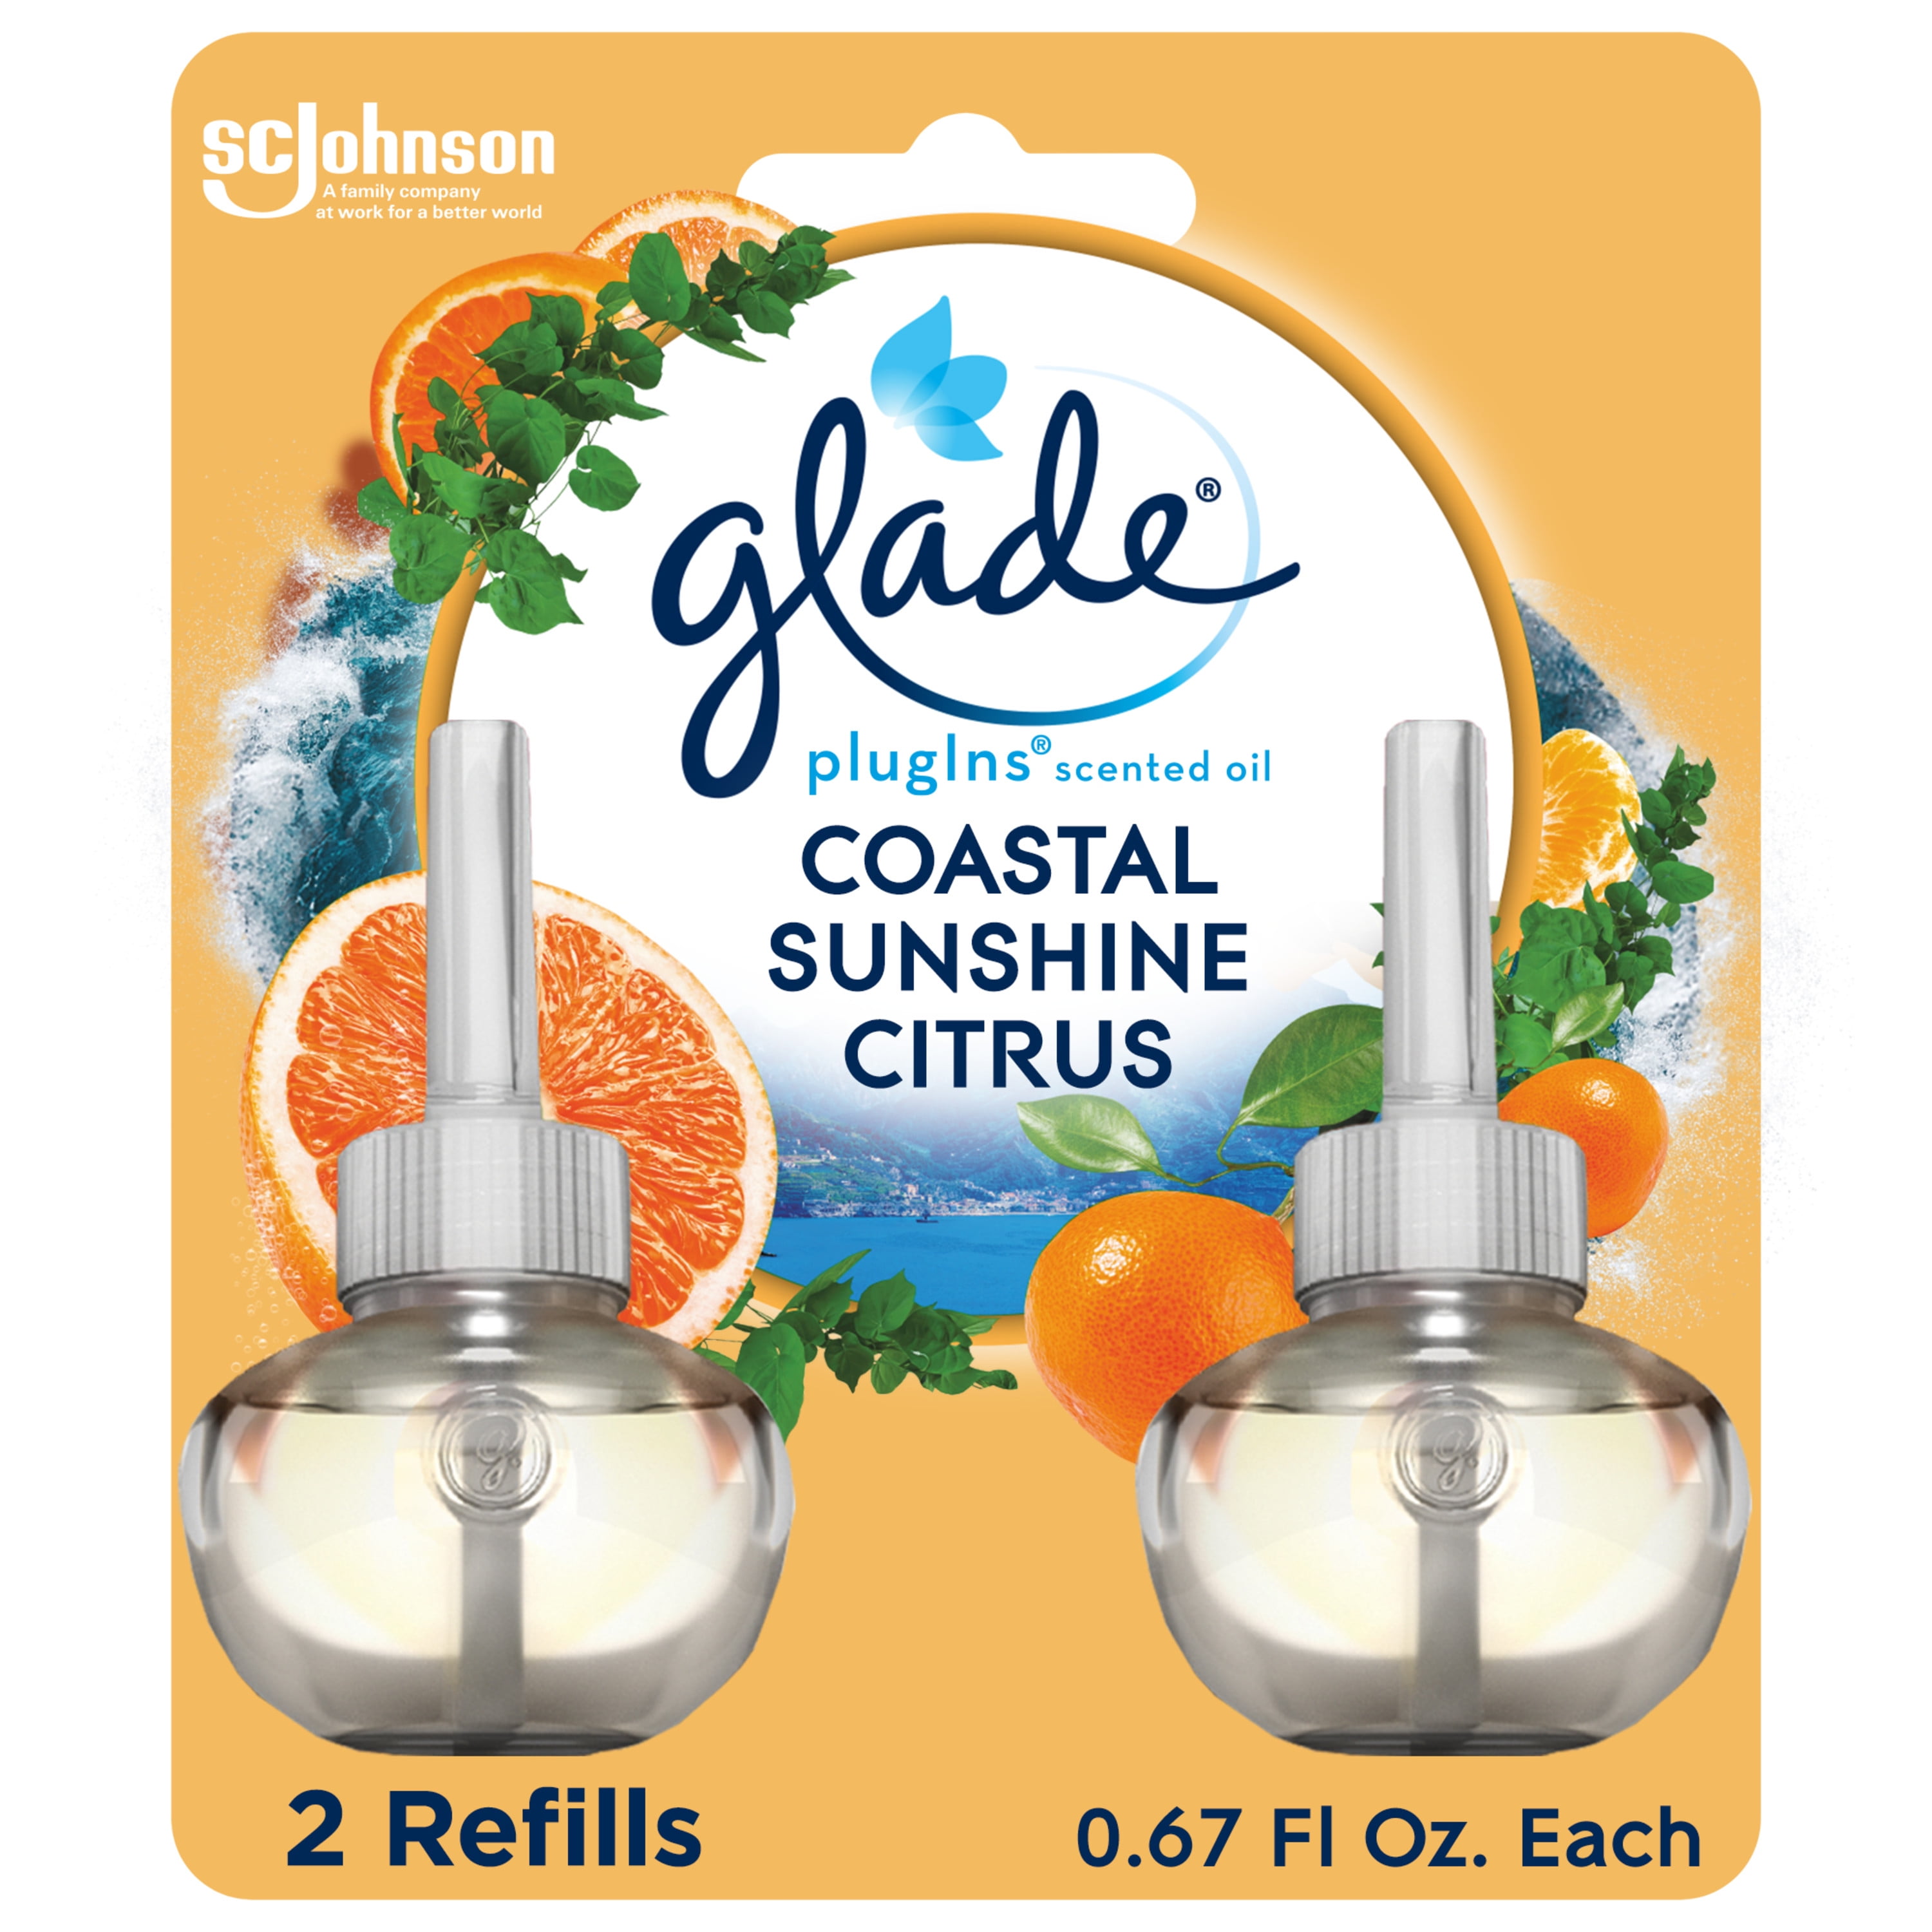 Glade PlugIns Scented Oil 2 Refills, Glade Plug in refills, Air Freshener, Coastal Sunshine Citrus, 2 x 0.67 Oz